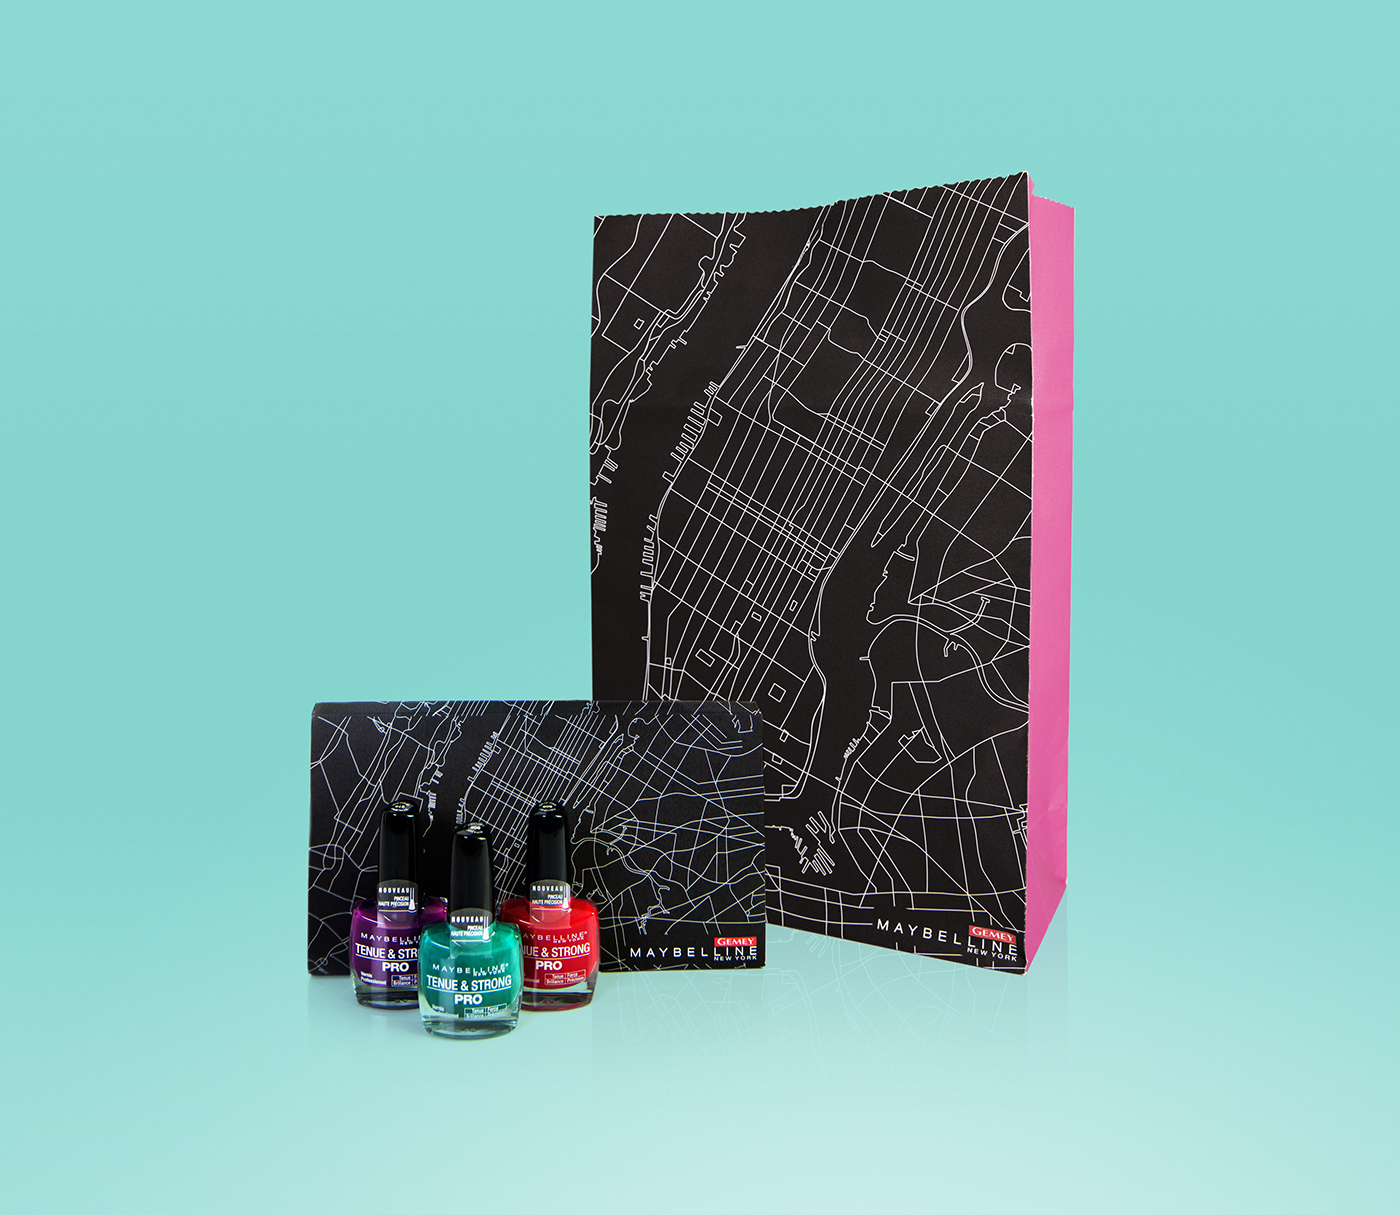 New York nyc nail polish Maybelline gemey press kit paper bag cd cover Manhattan beauty cosmetics magazine brochure soho